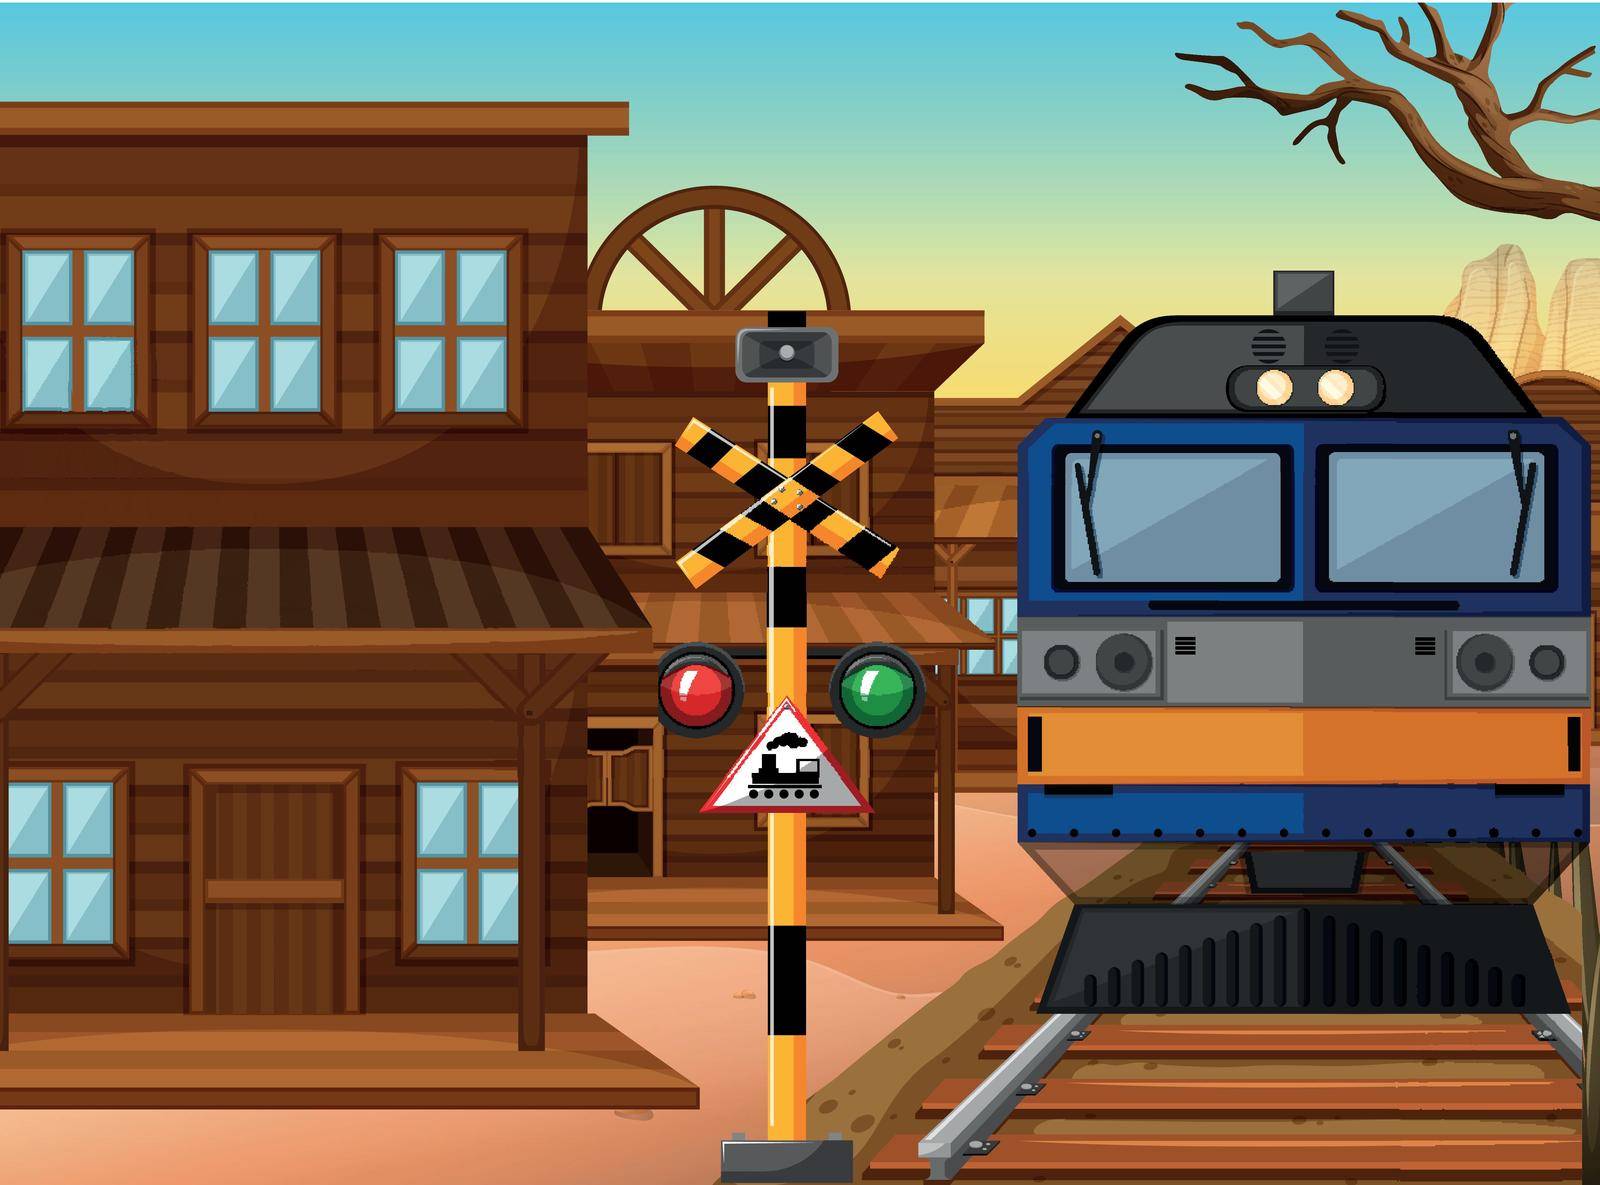 Train ride through western town illustration